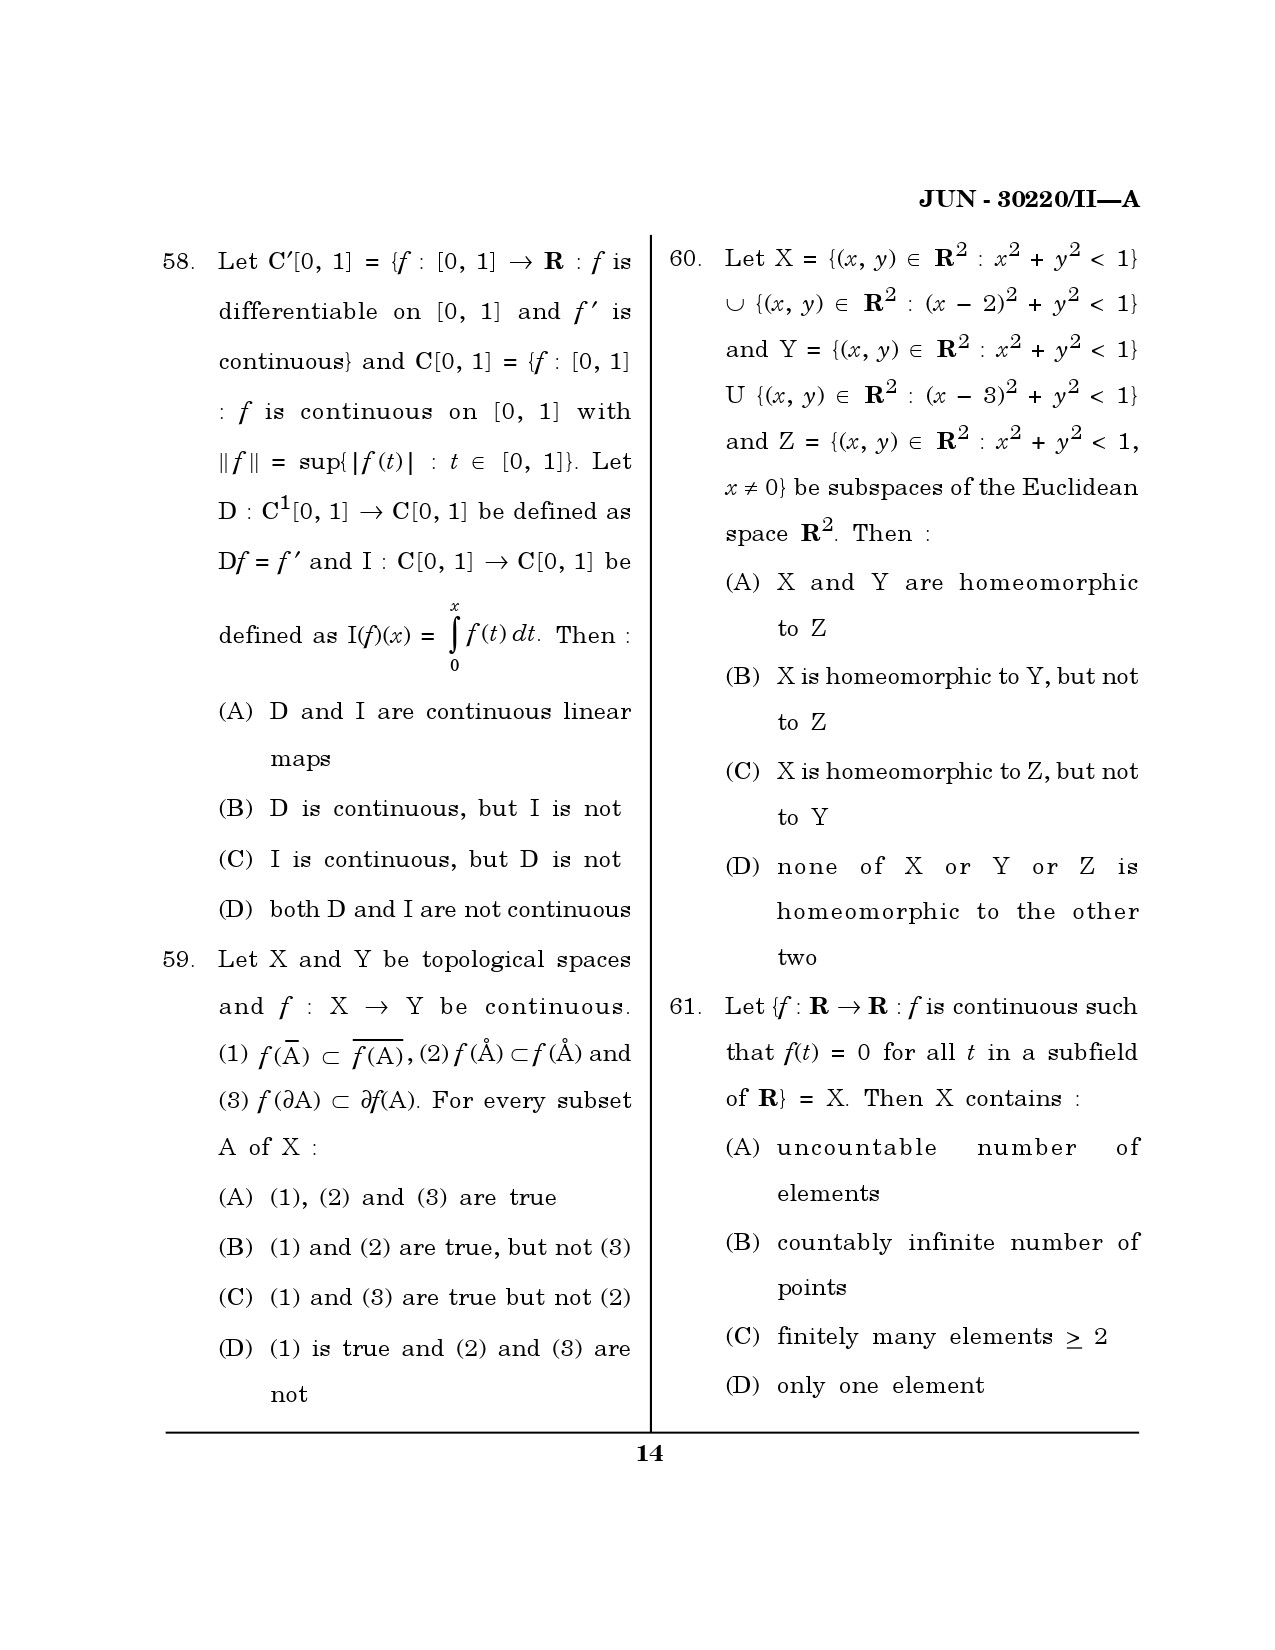 Maharashtra SET Mathematical Sciences Question Paper II June 2020 13